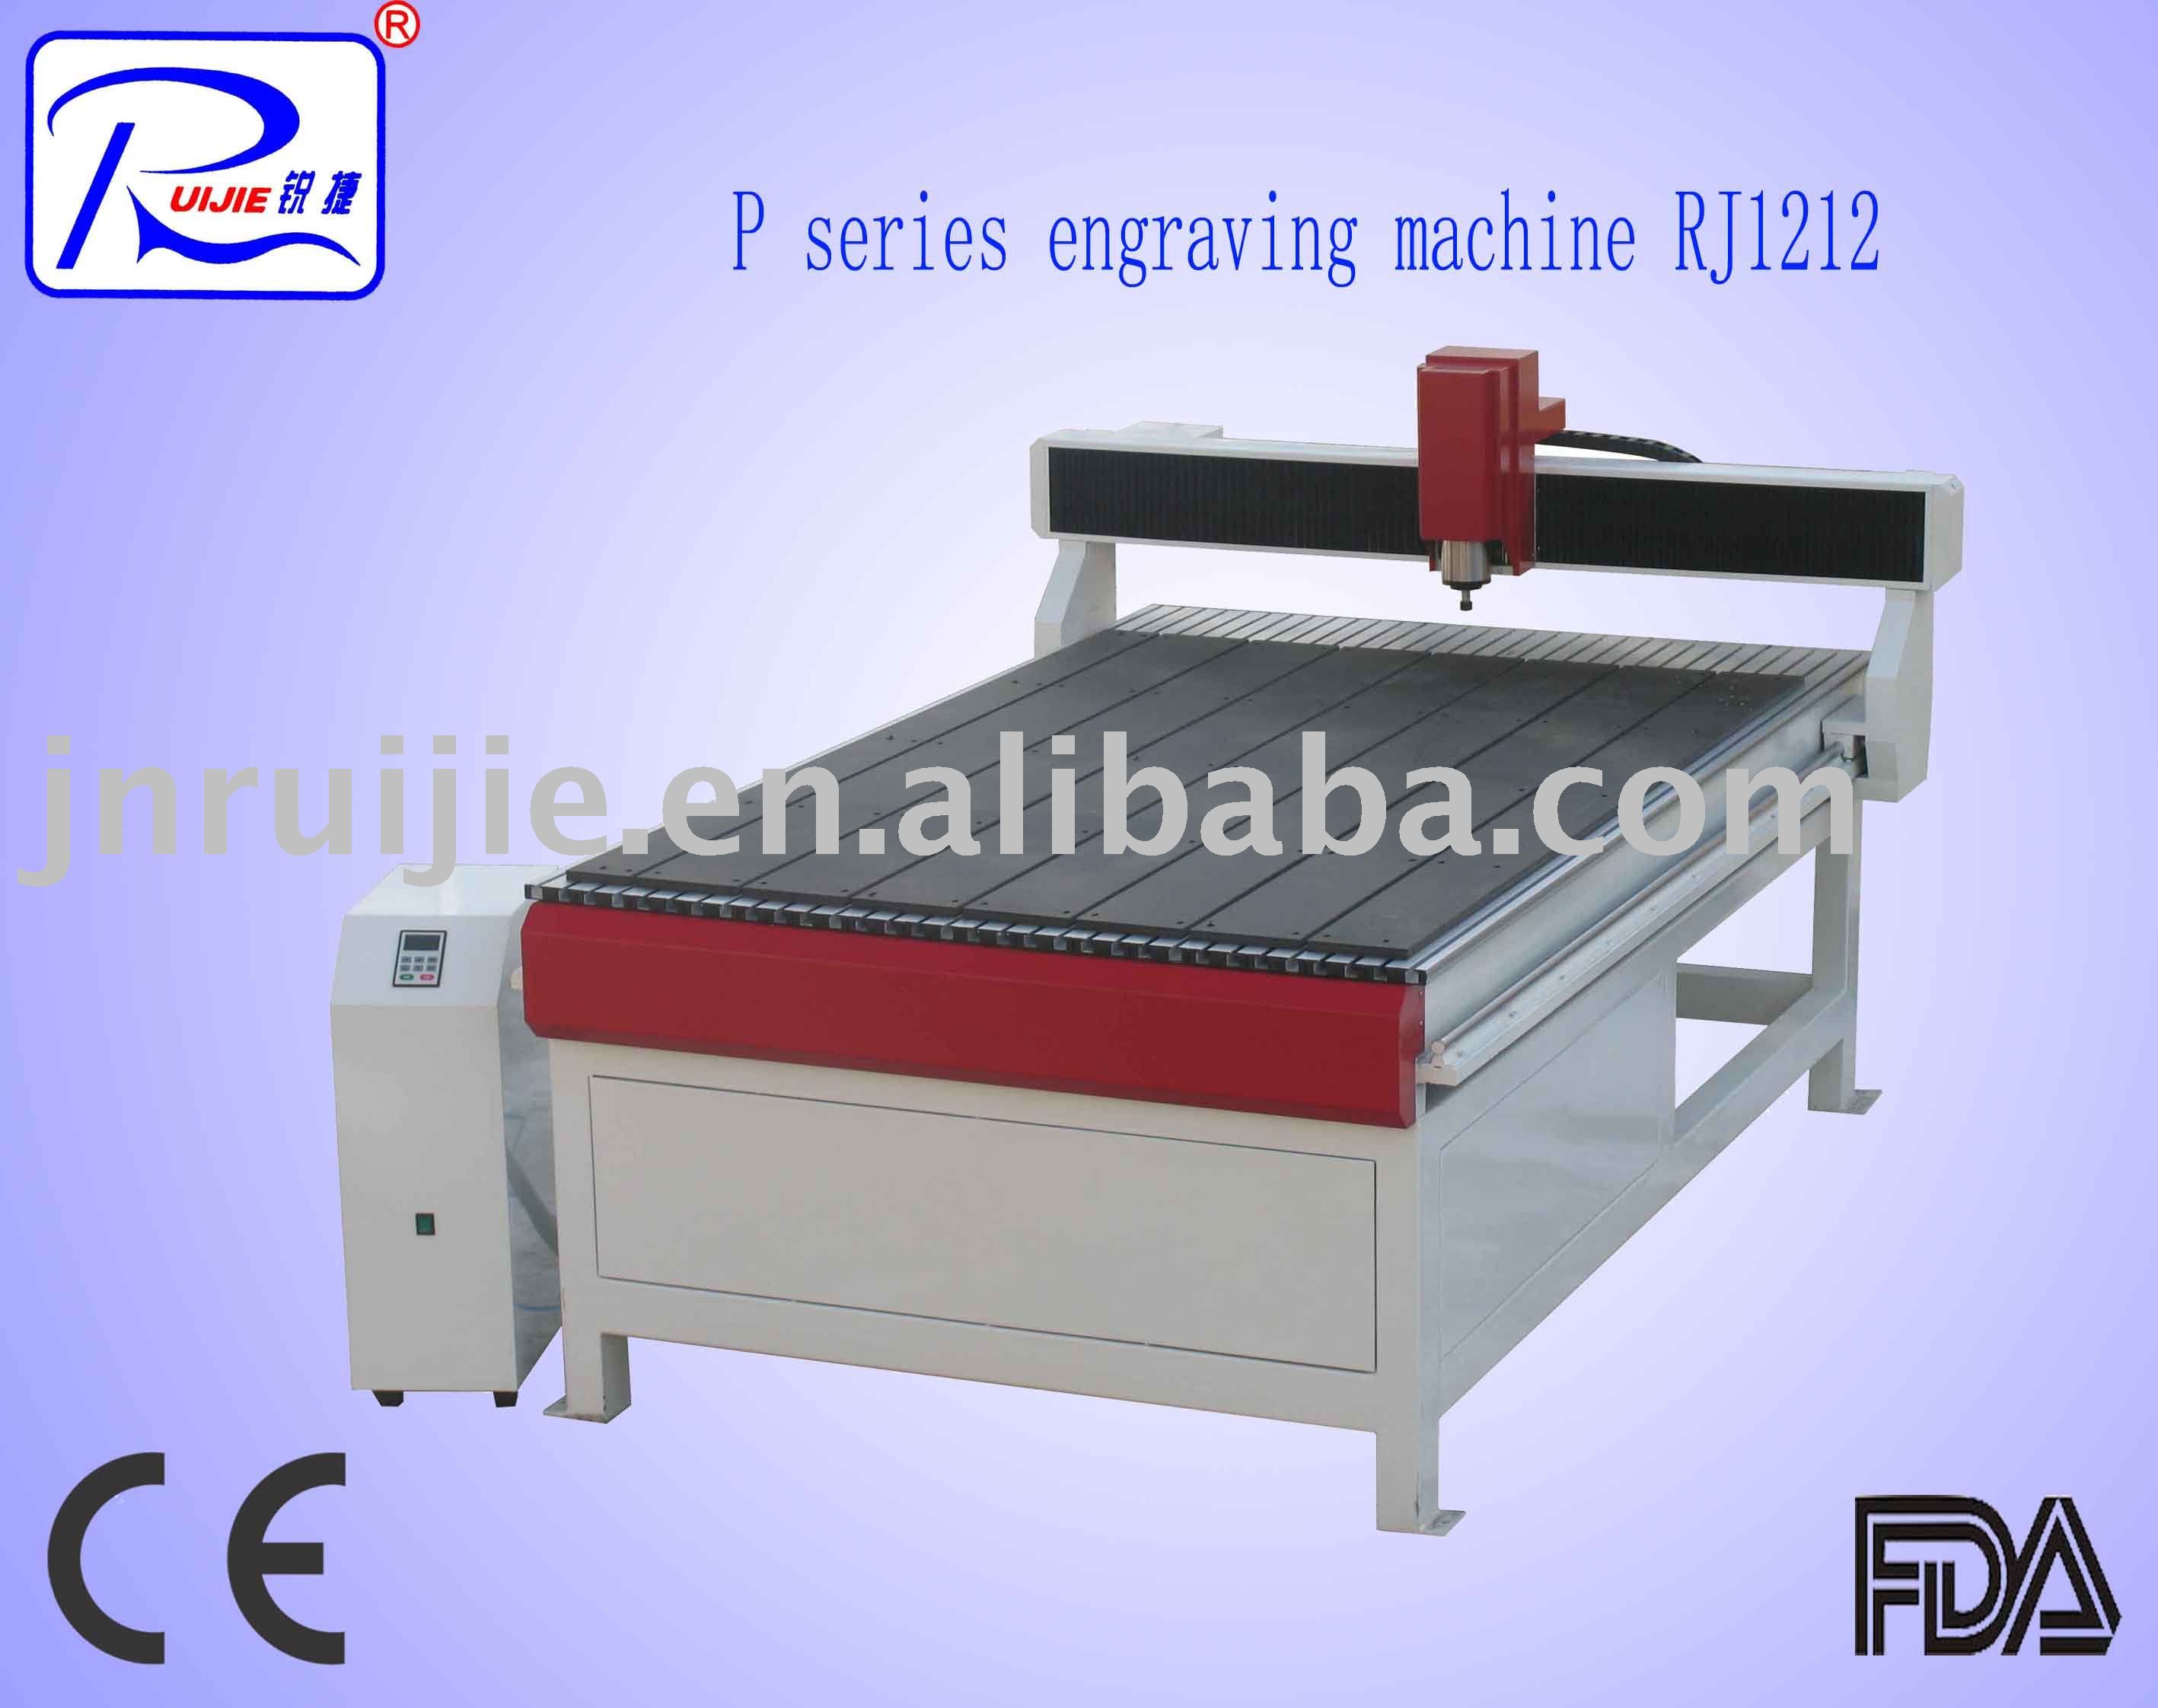 P series engraving machine RJ1212